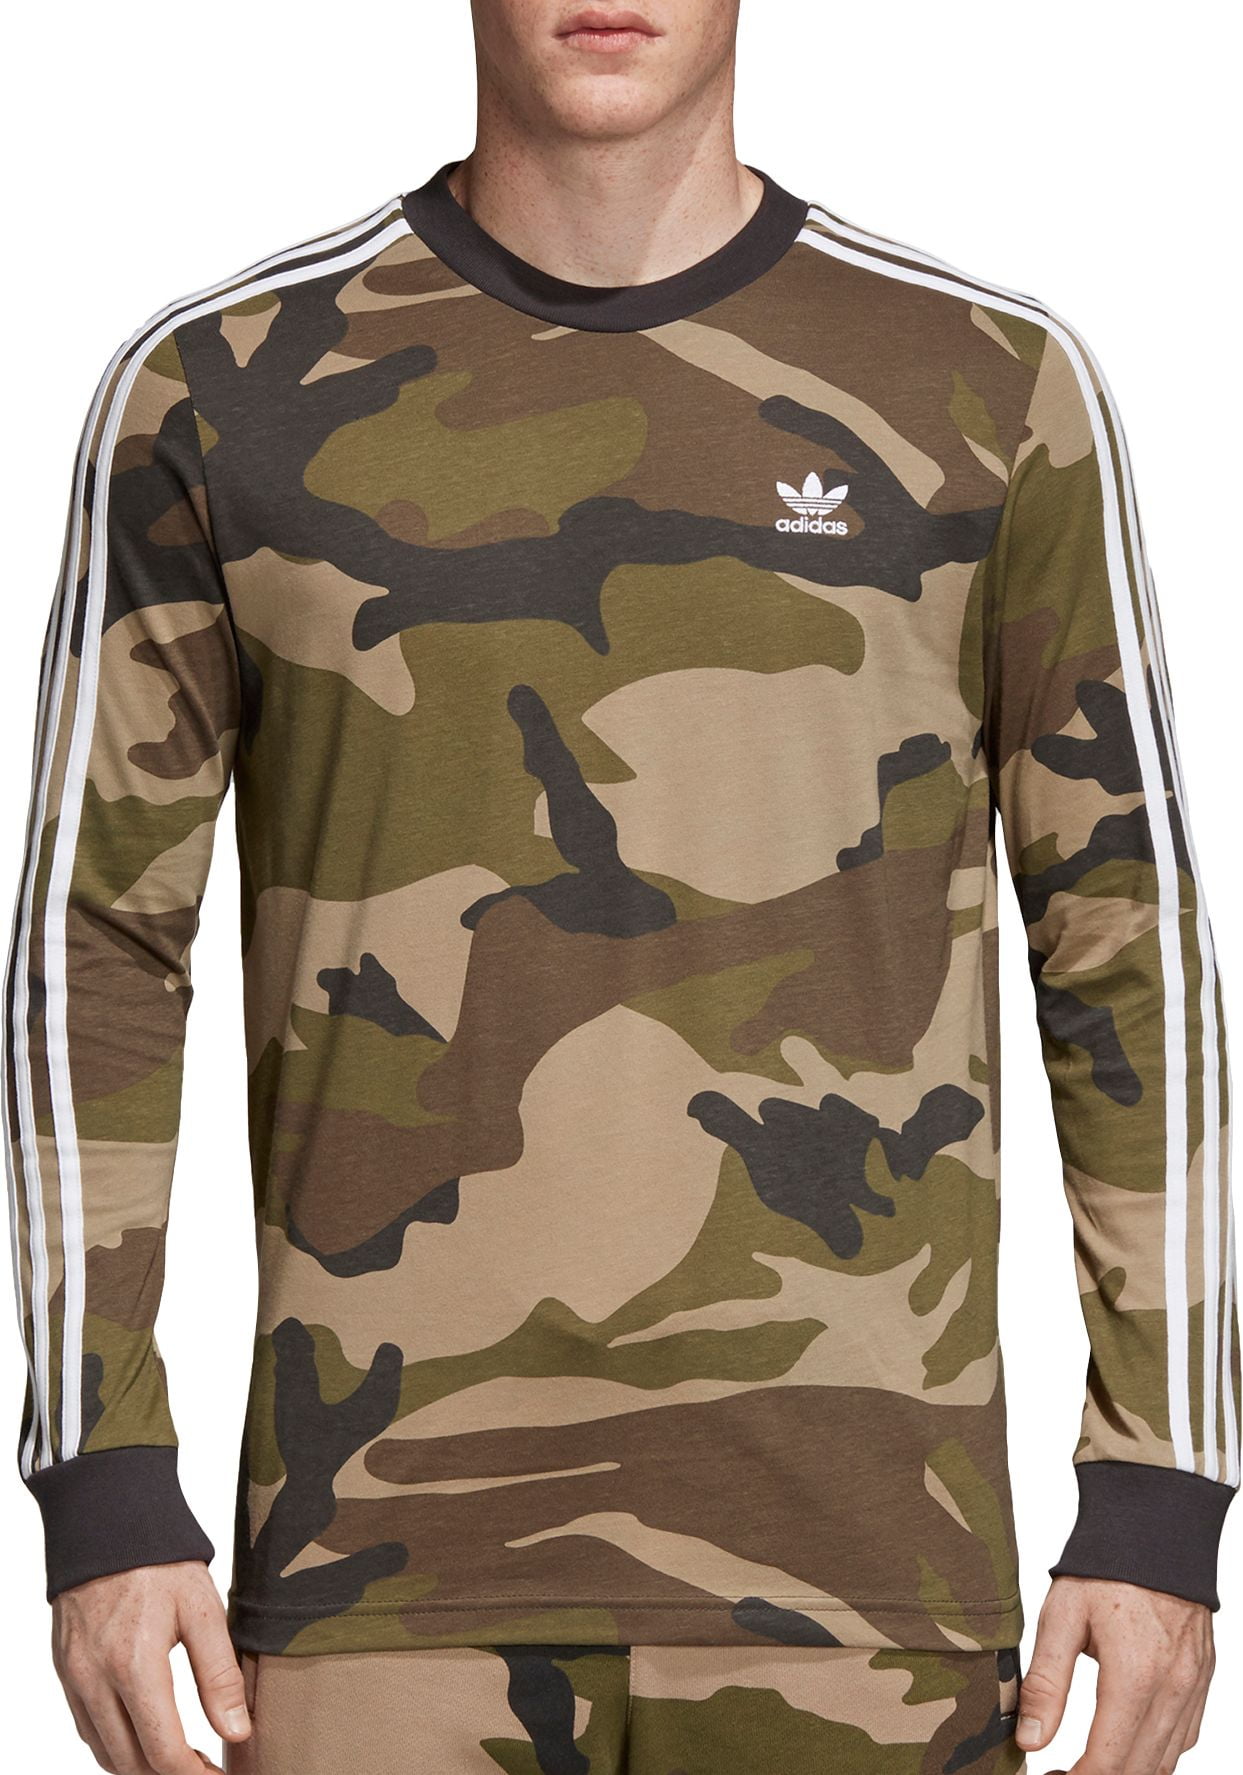 Adidas - adidas Originals Men's Graphic Camouflage Long Sleeve Shirt